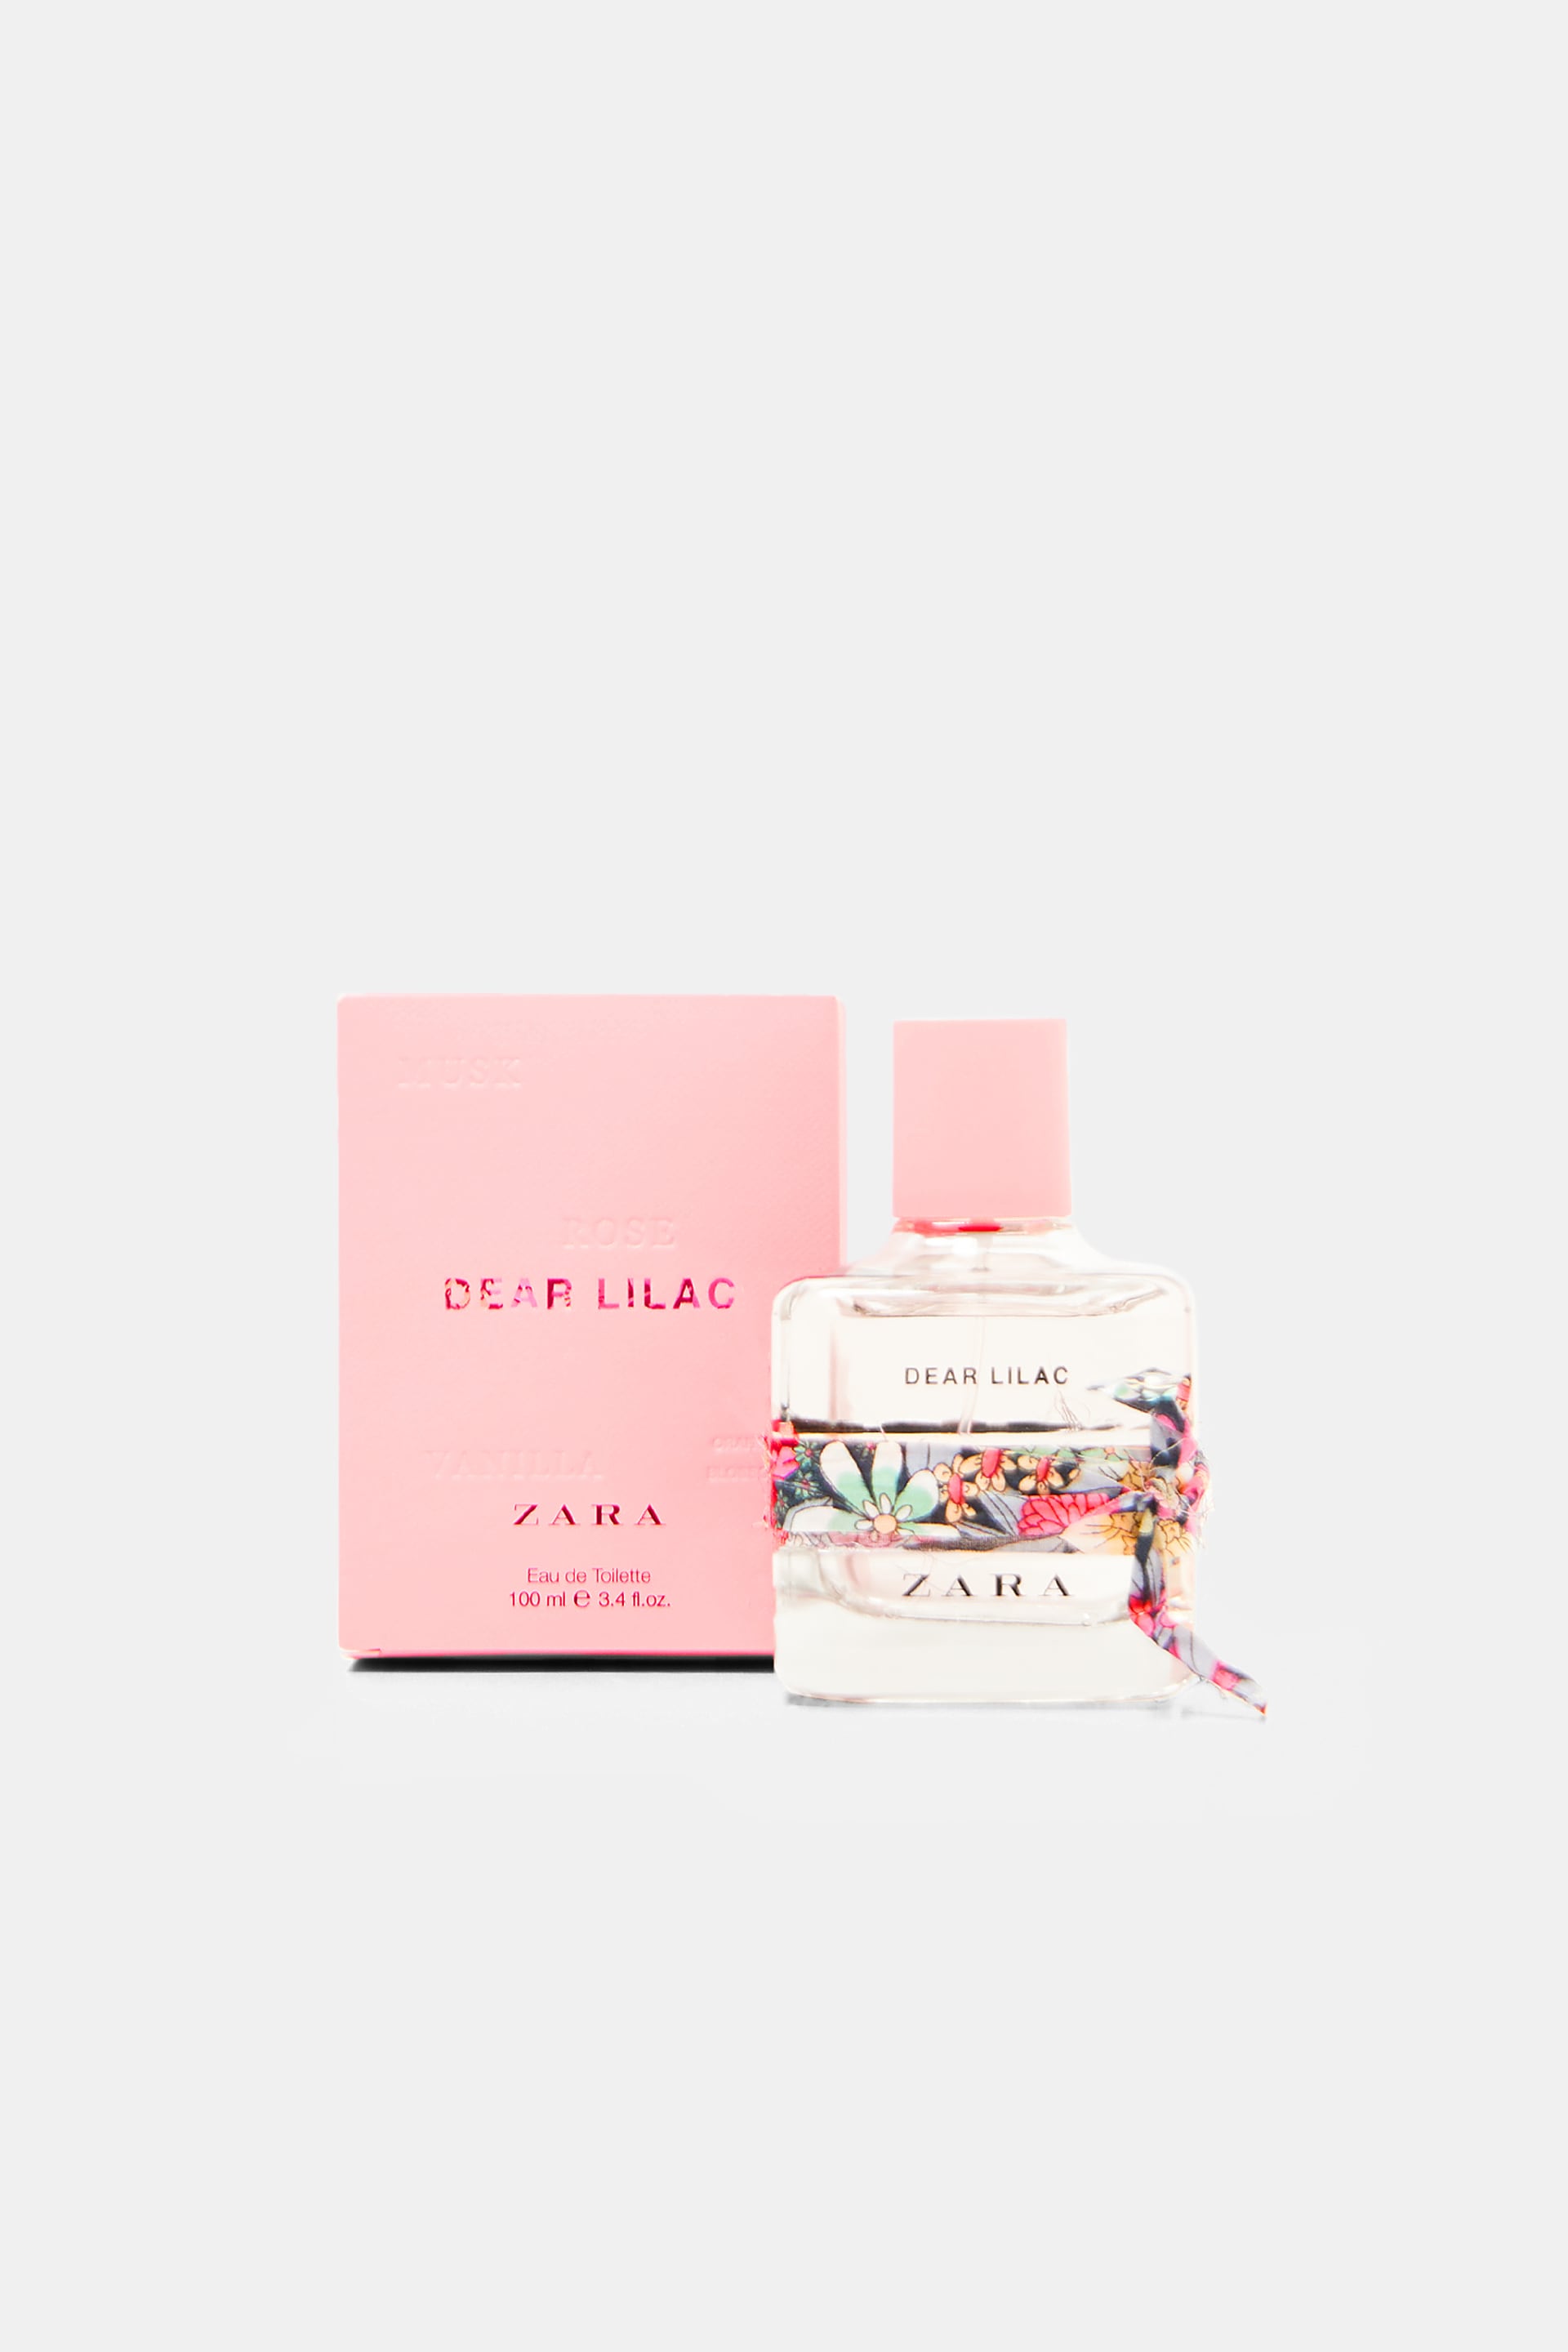 Dear Lilac Zara perfume - a new fragrance for women 2018